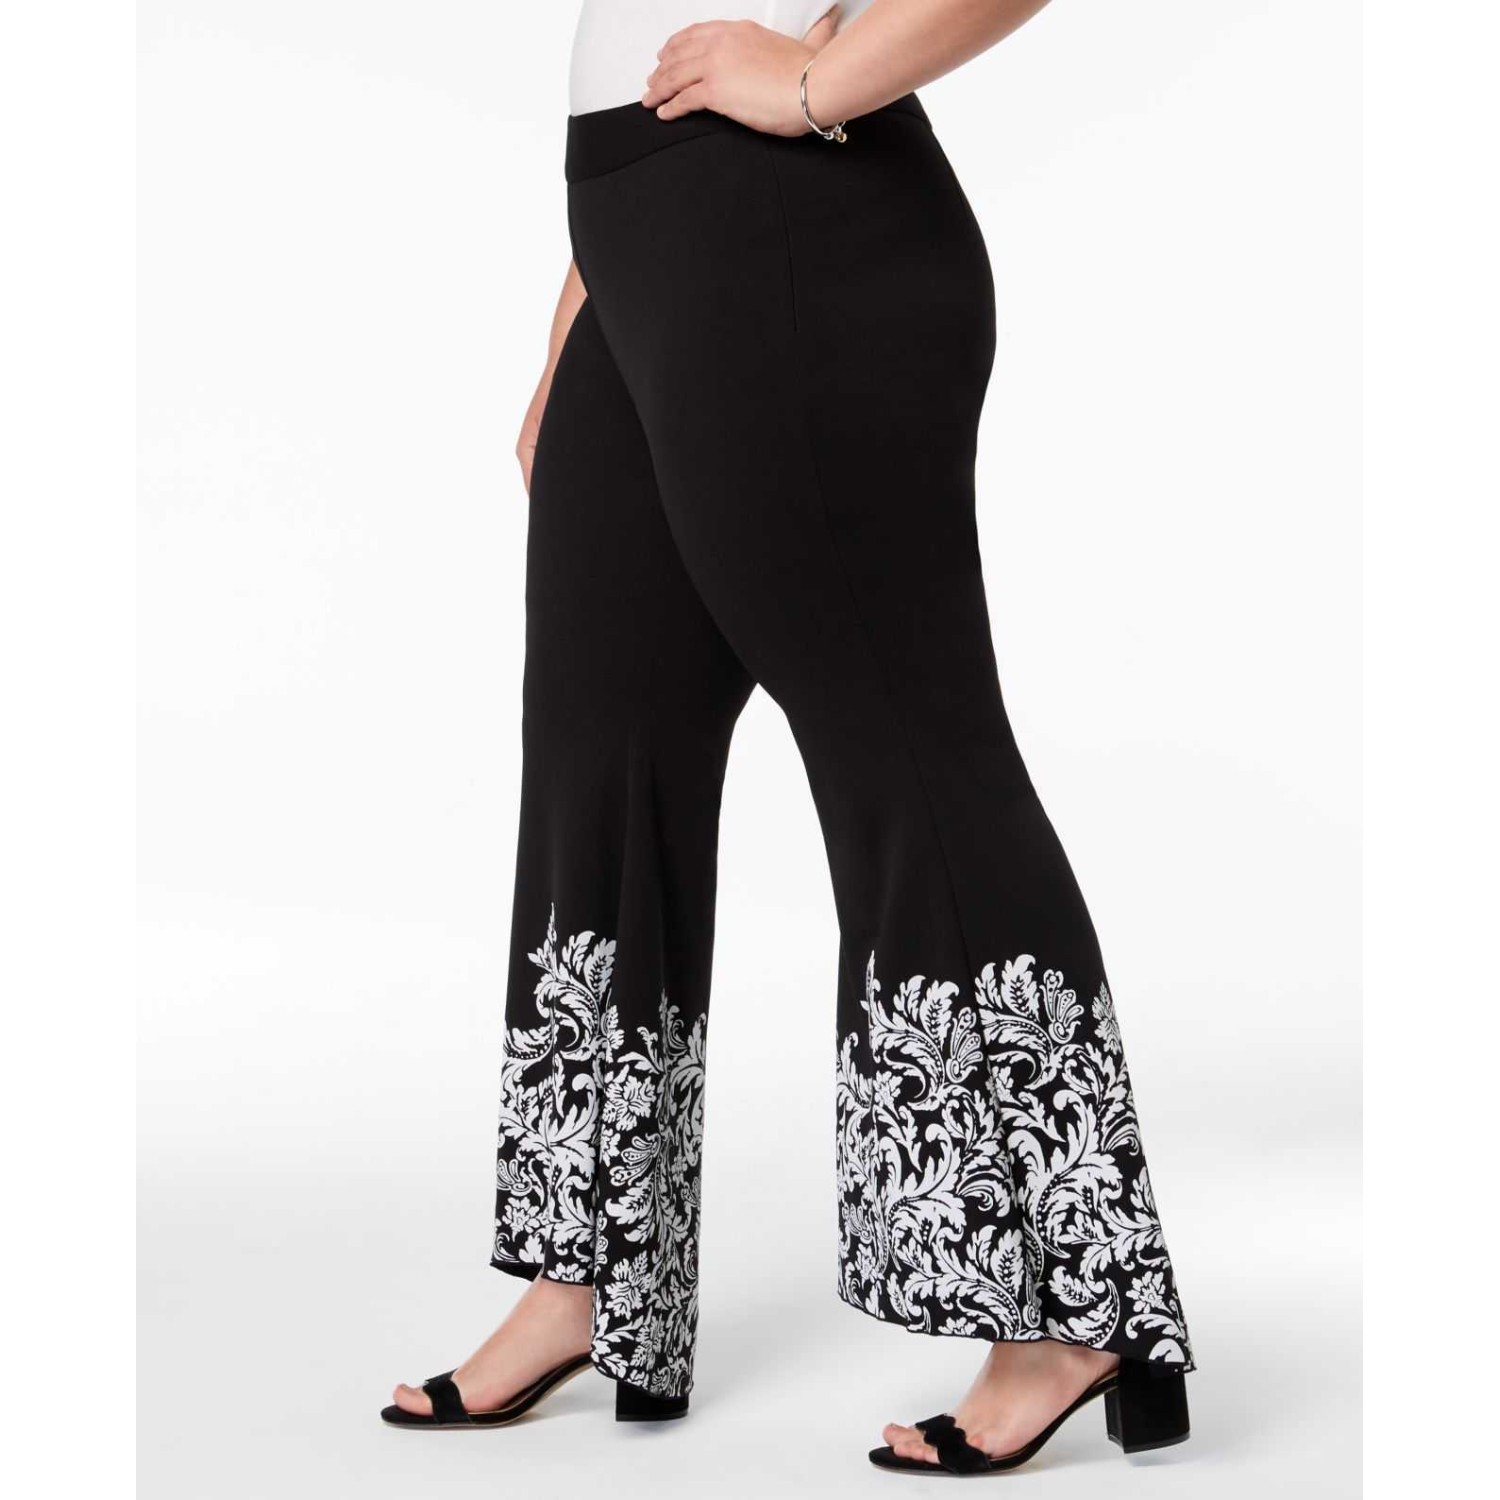 INC International Concepts Plus Size Printed Tulip Hem Pants (Black, 20W)